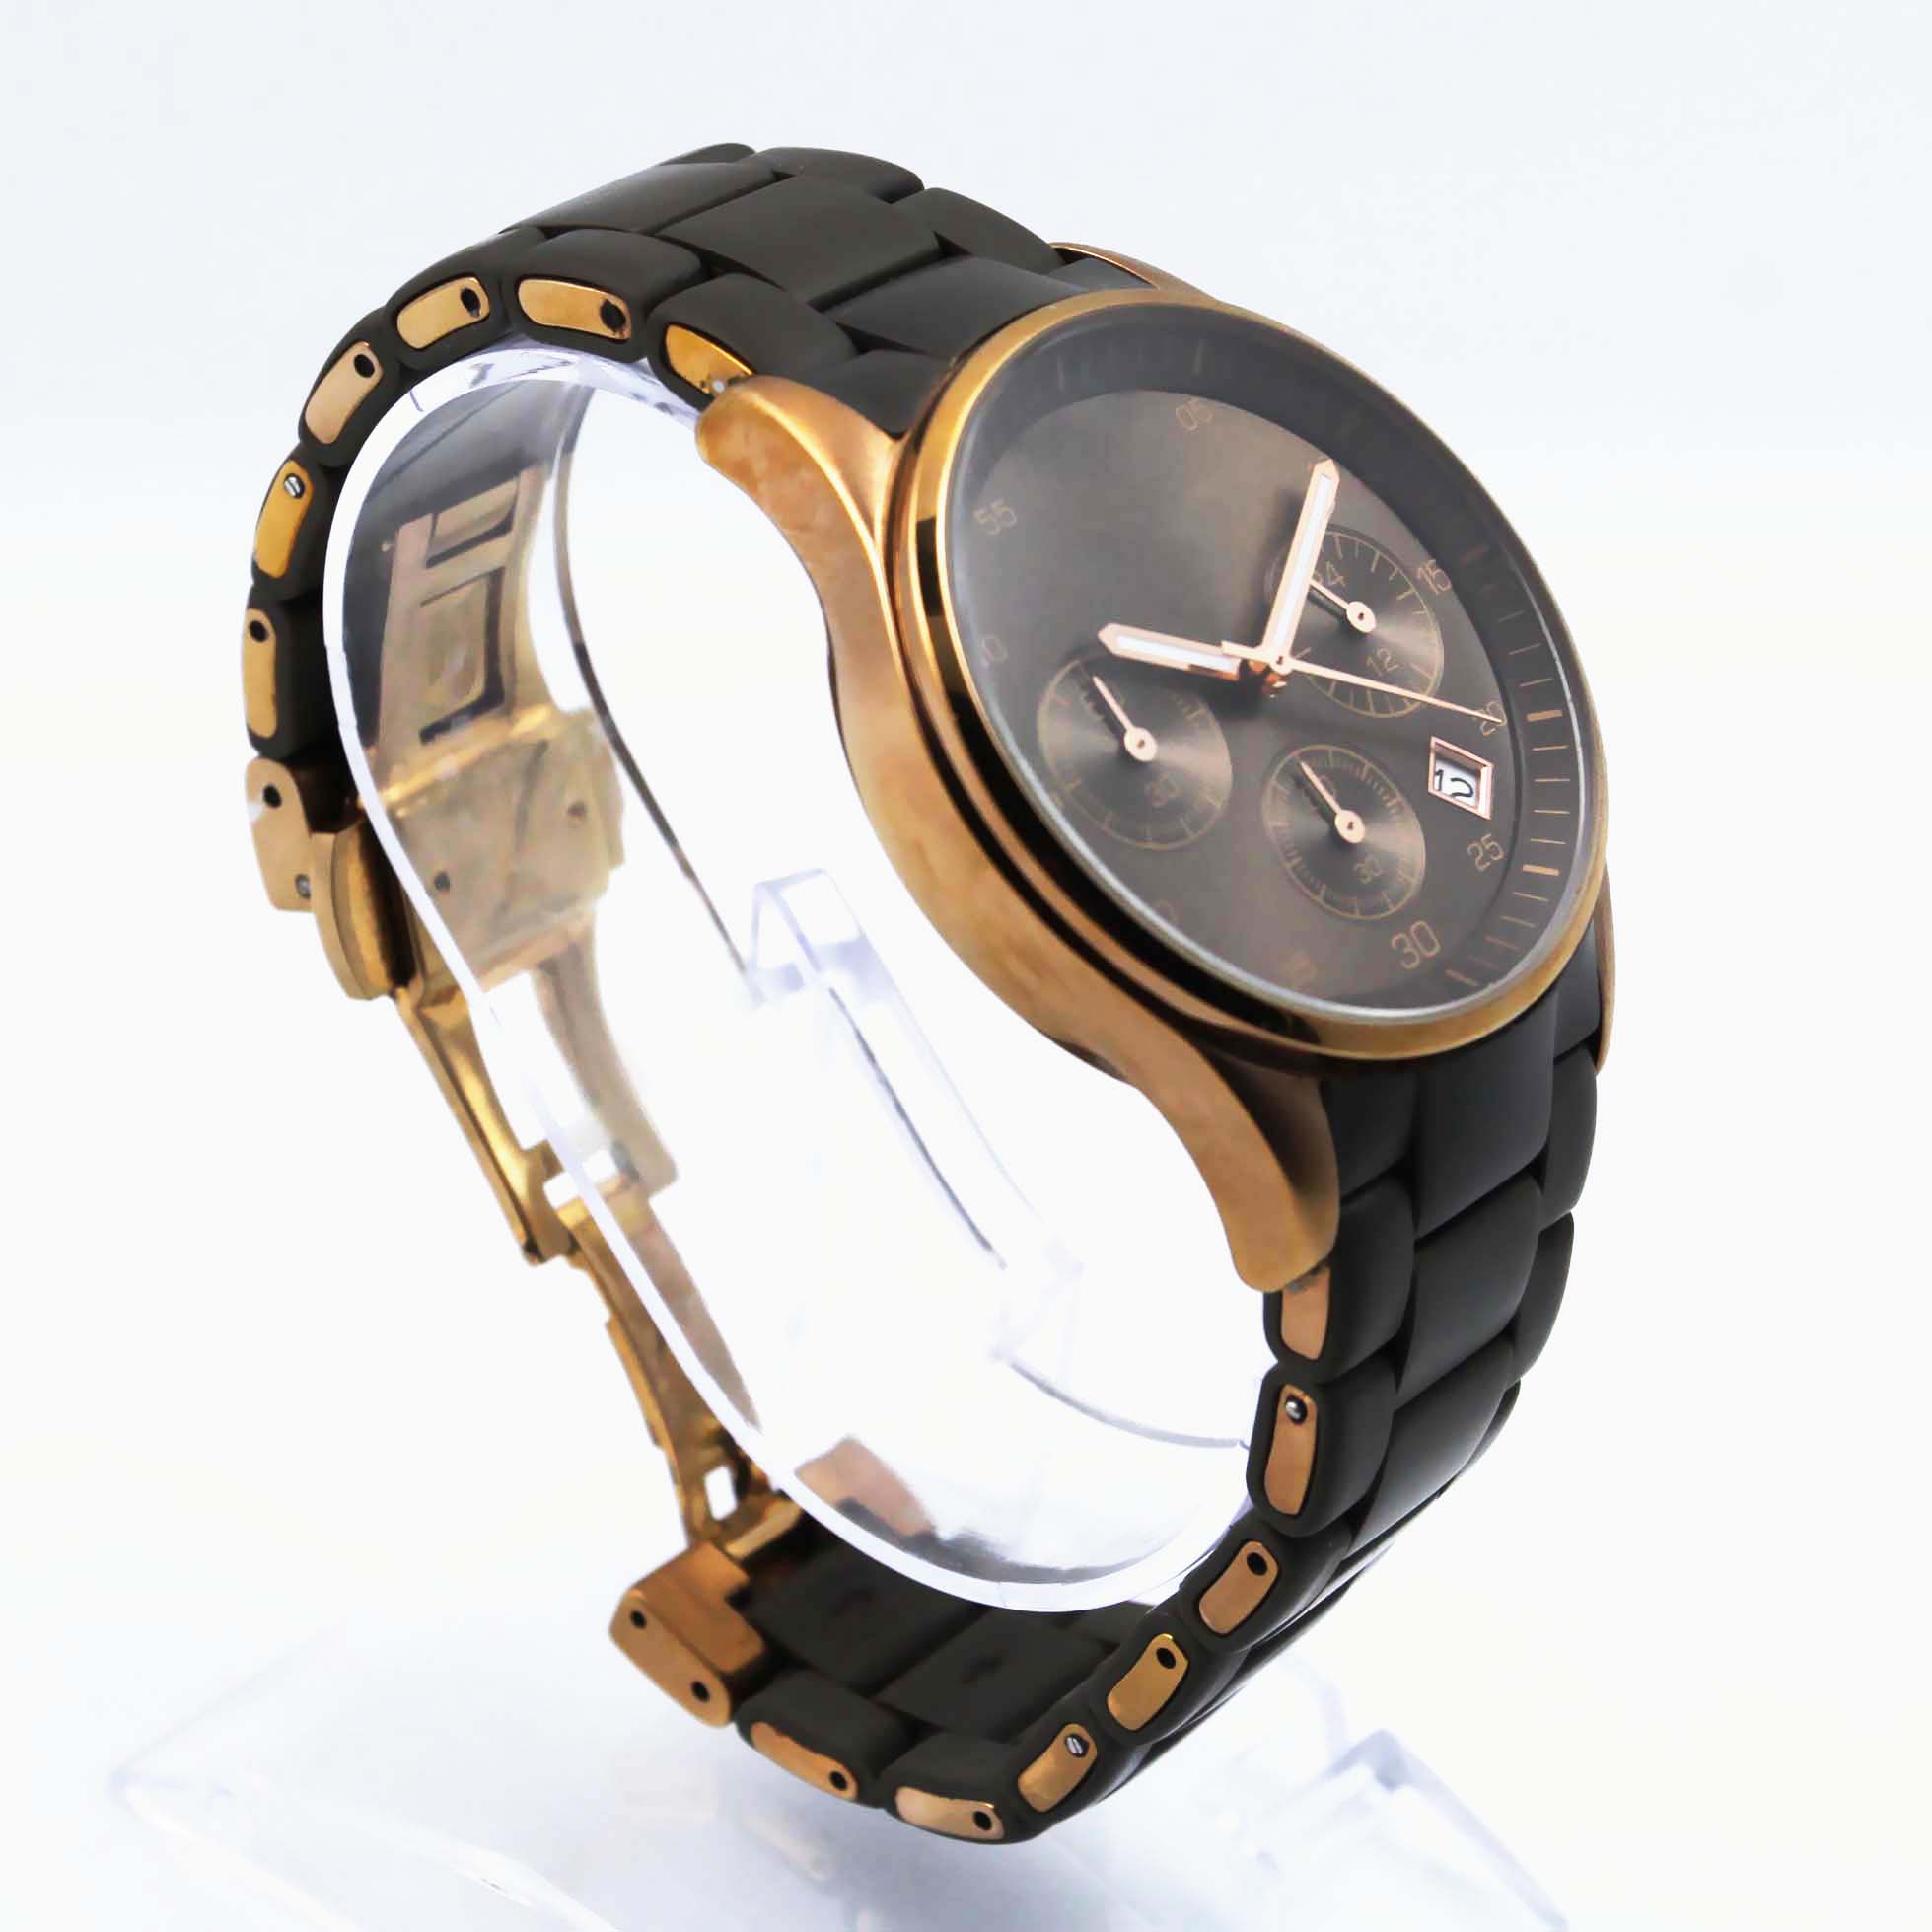 #02066Men's wristwatch quartz analog leather strap watch